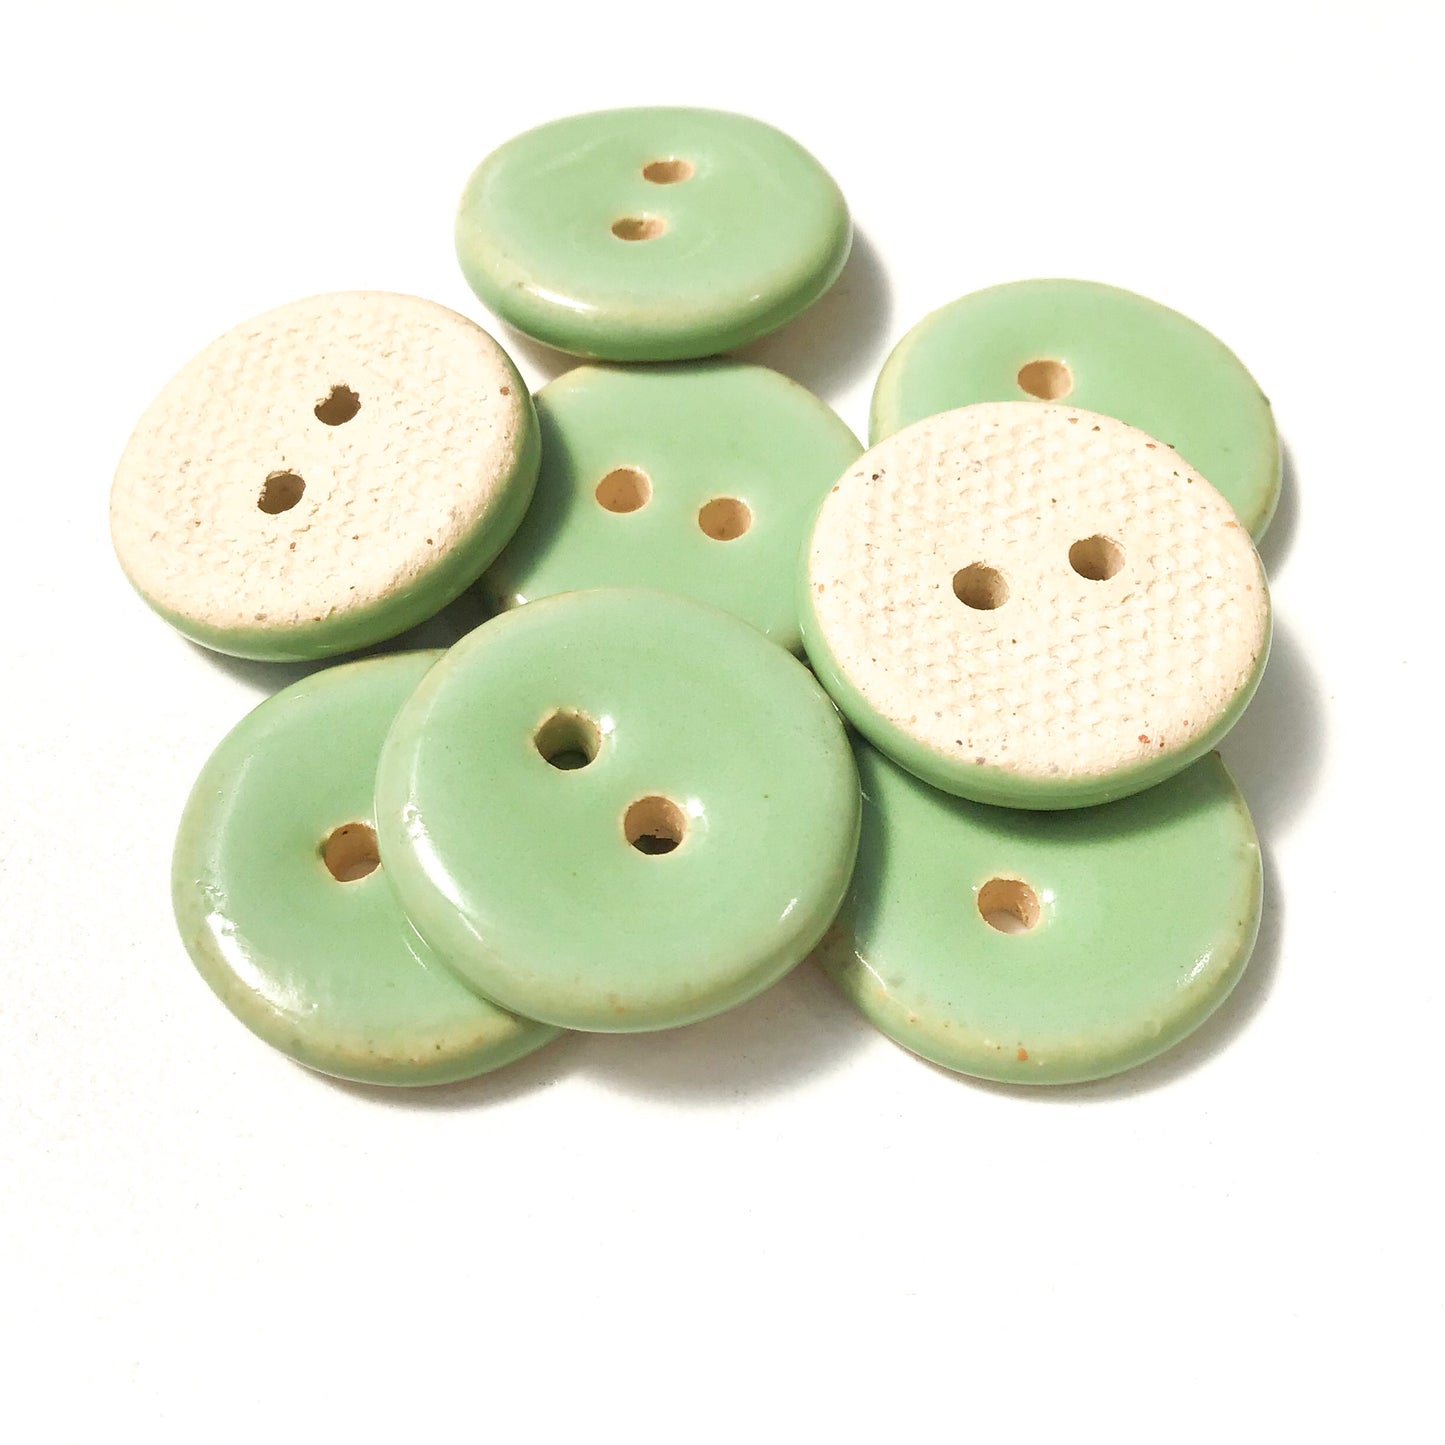 Mint Green Ceramic Buttons - Light Green Clay Buttons - 3/4" - 8 Pack